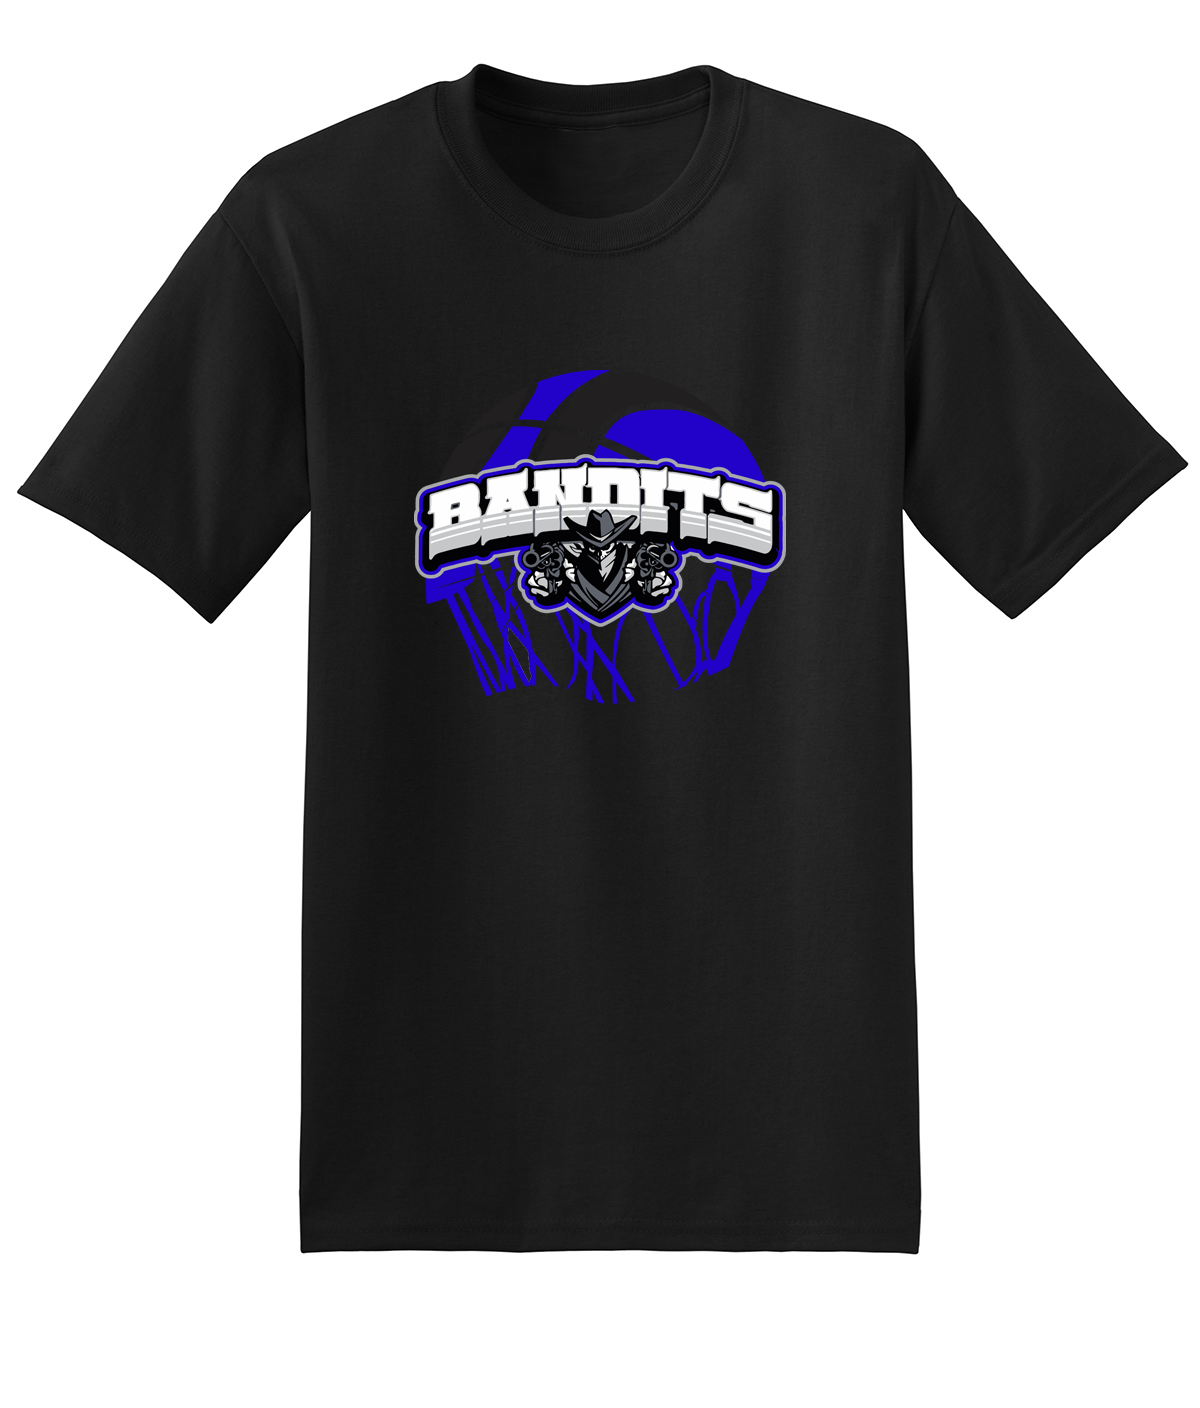 Capital City Bandits Basketball T-Shirt